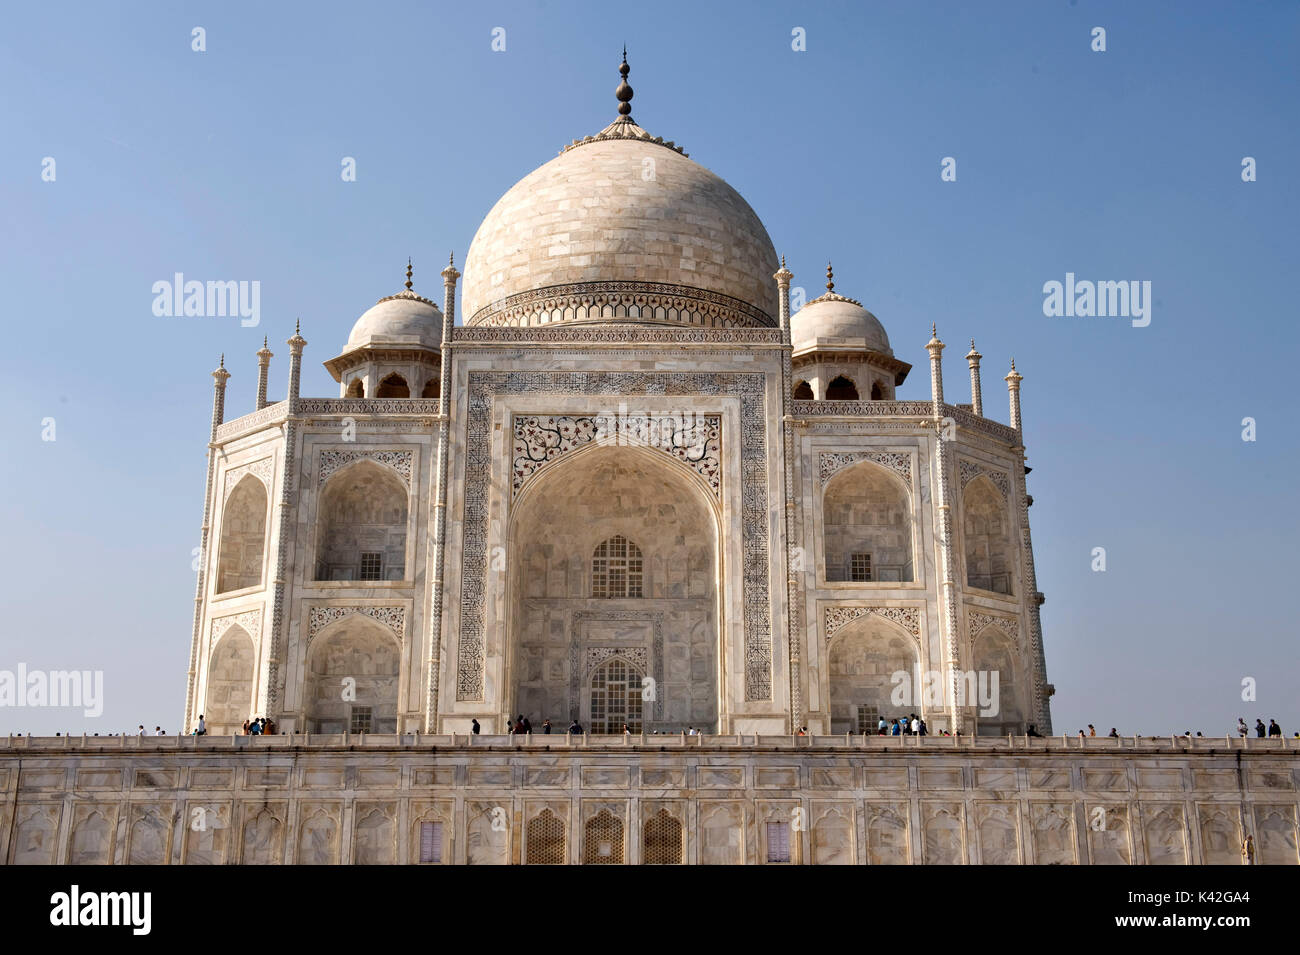 Taj mahal elements hi-res stock photography and images - Alamy